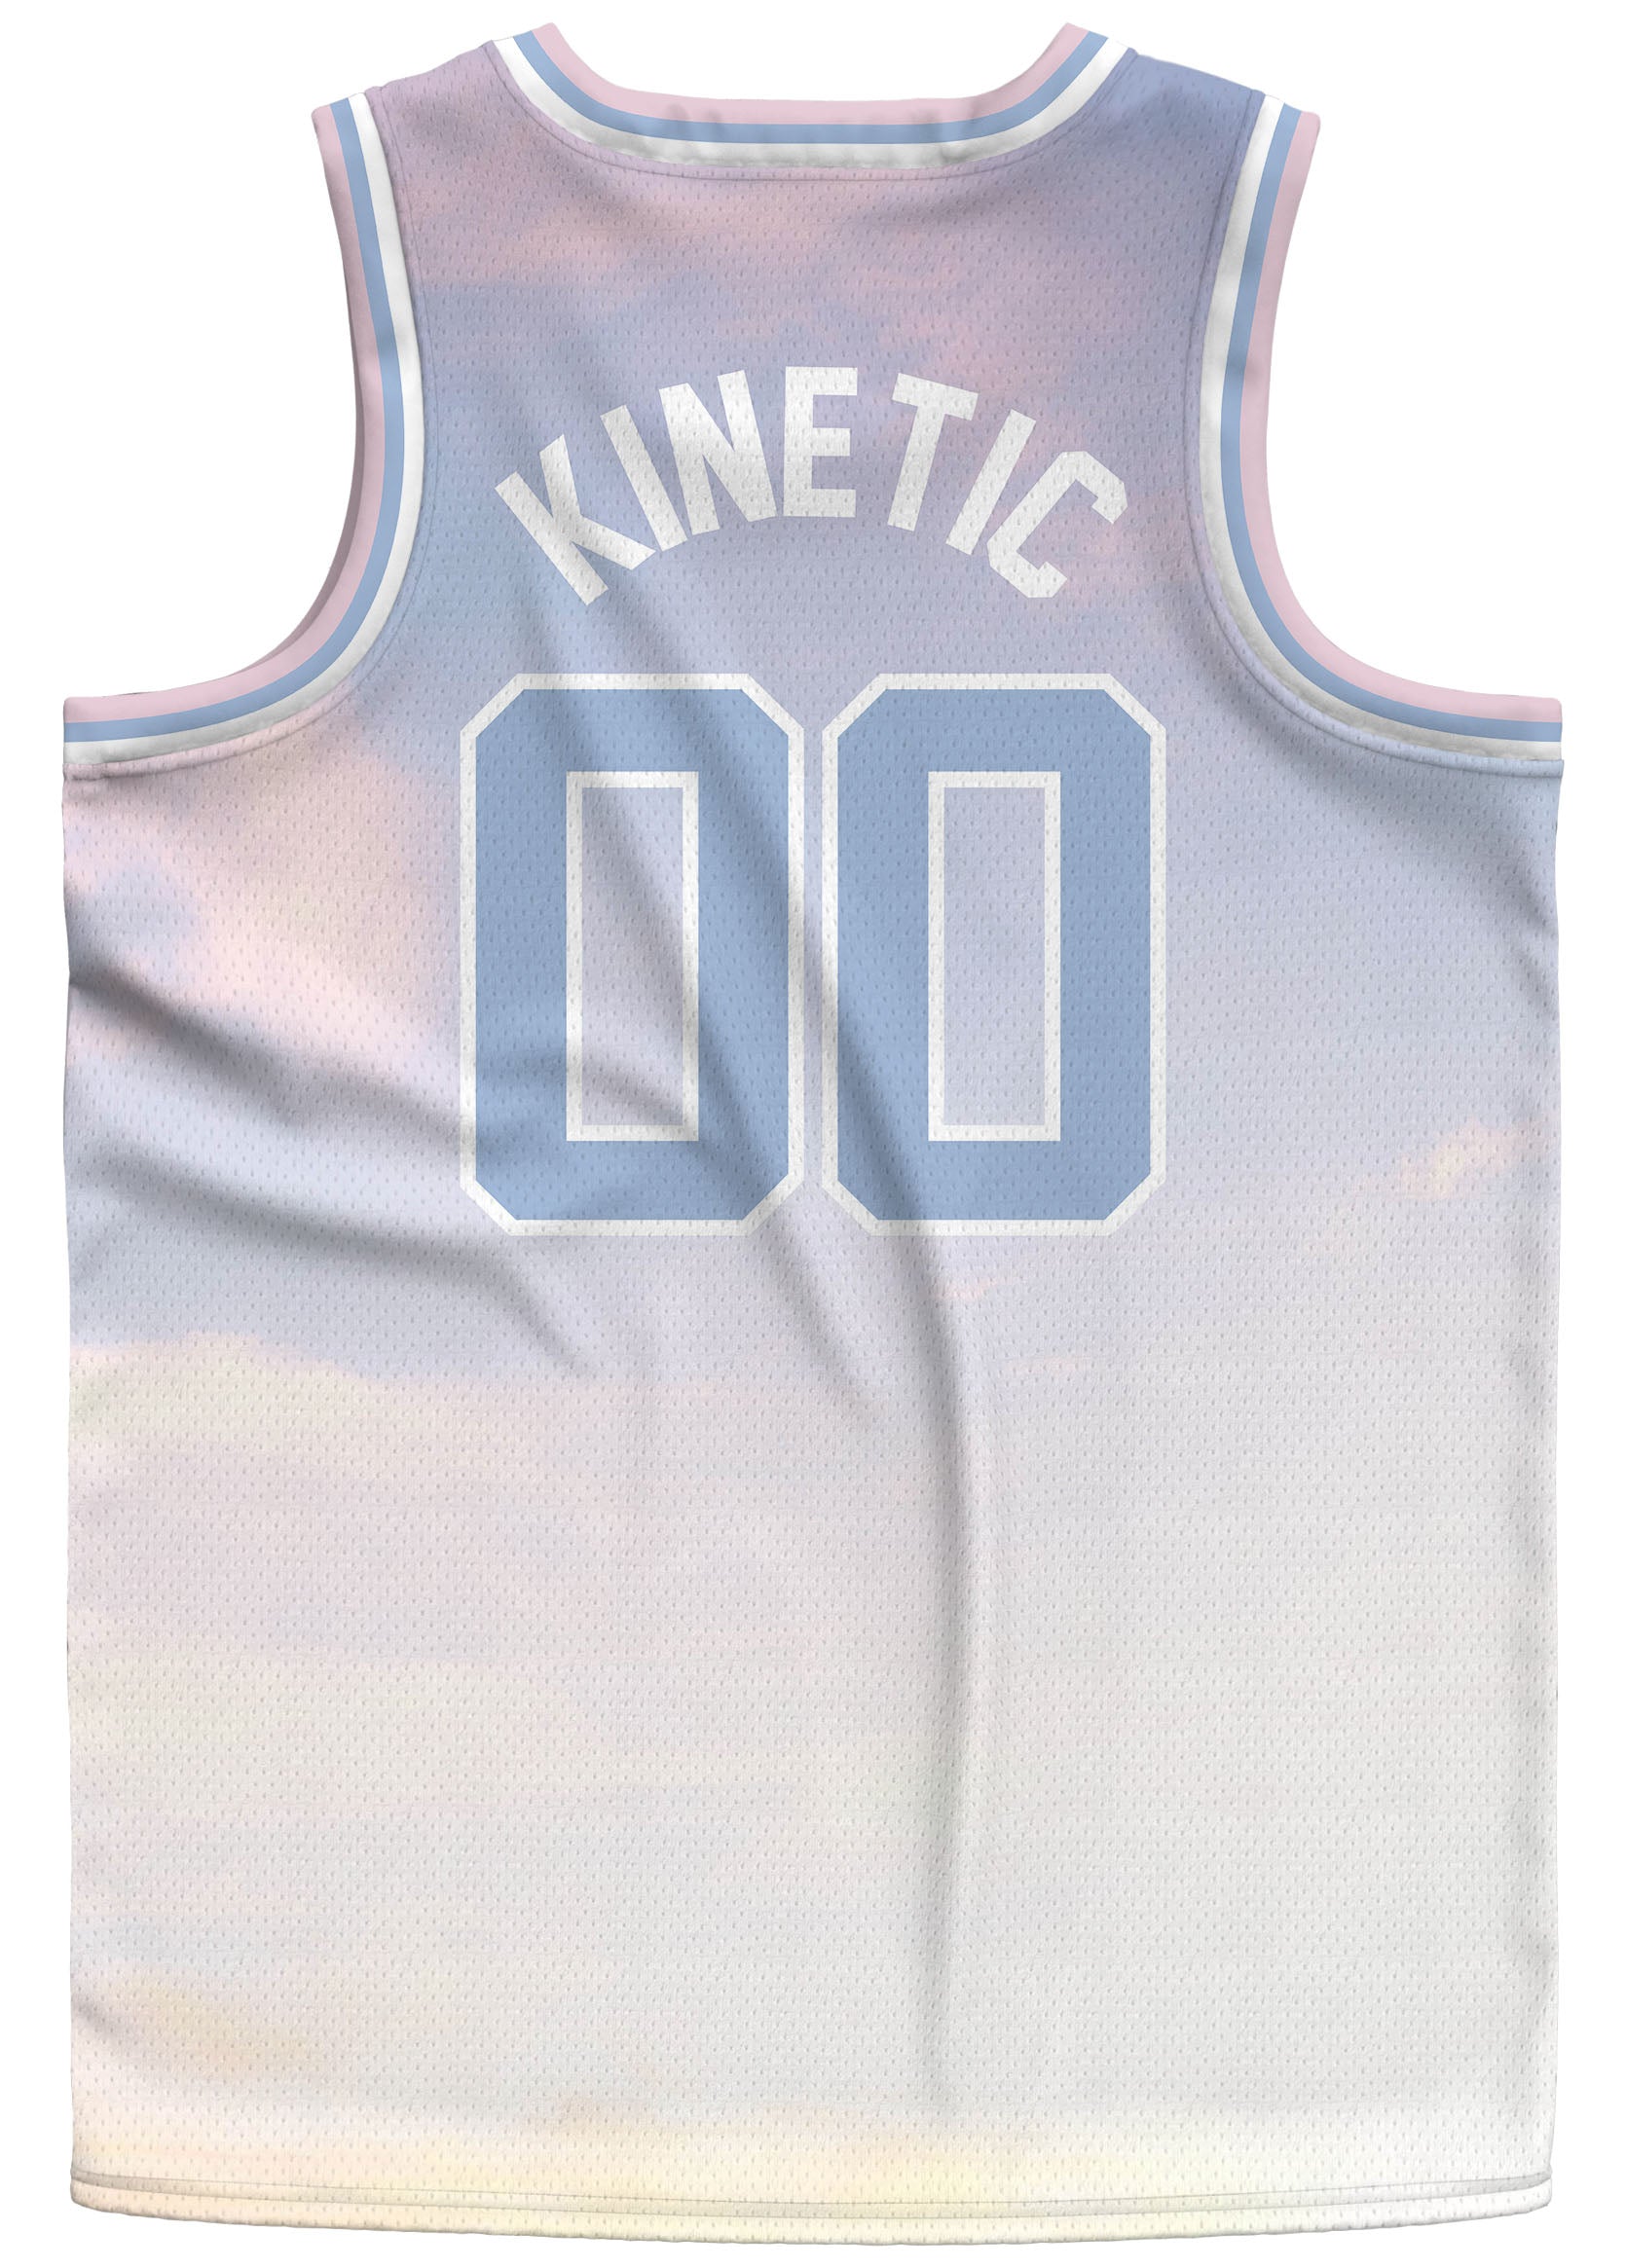 Kinetic ID - Pastel Sky Basketball Jersey